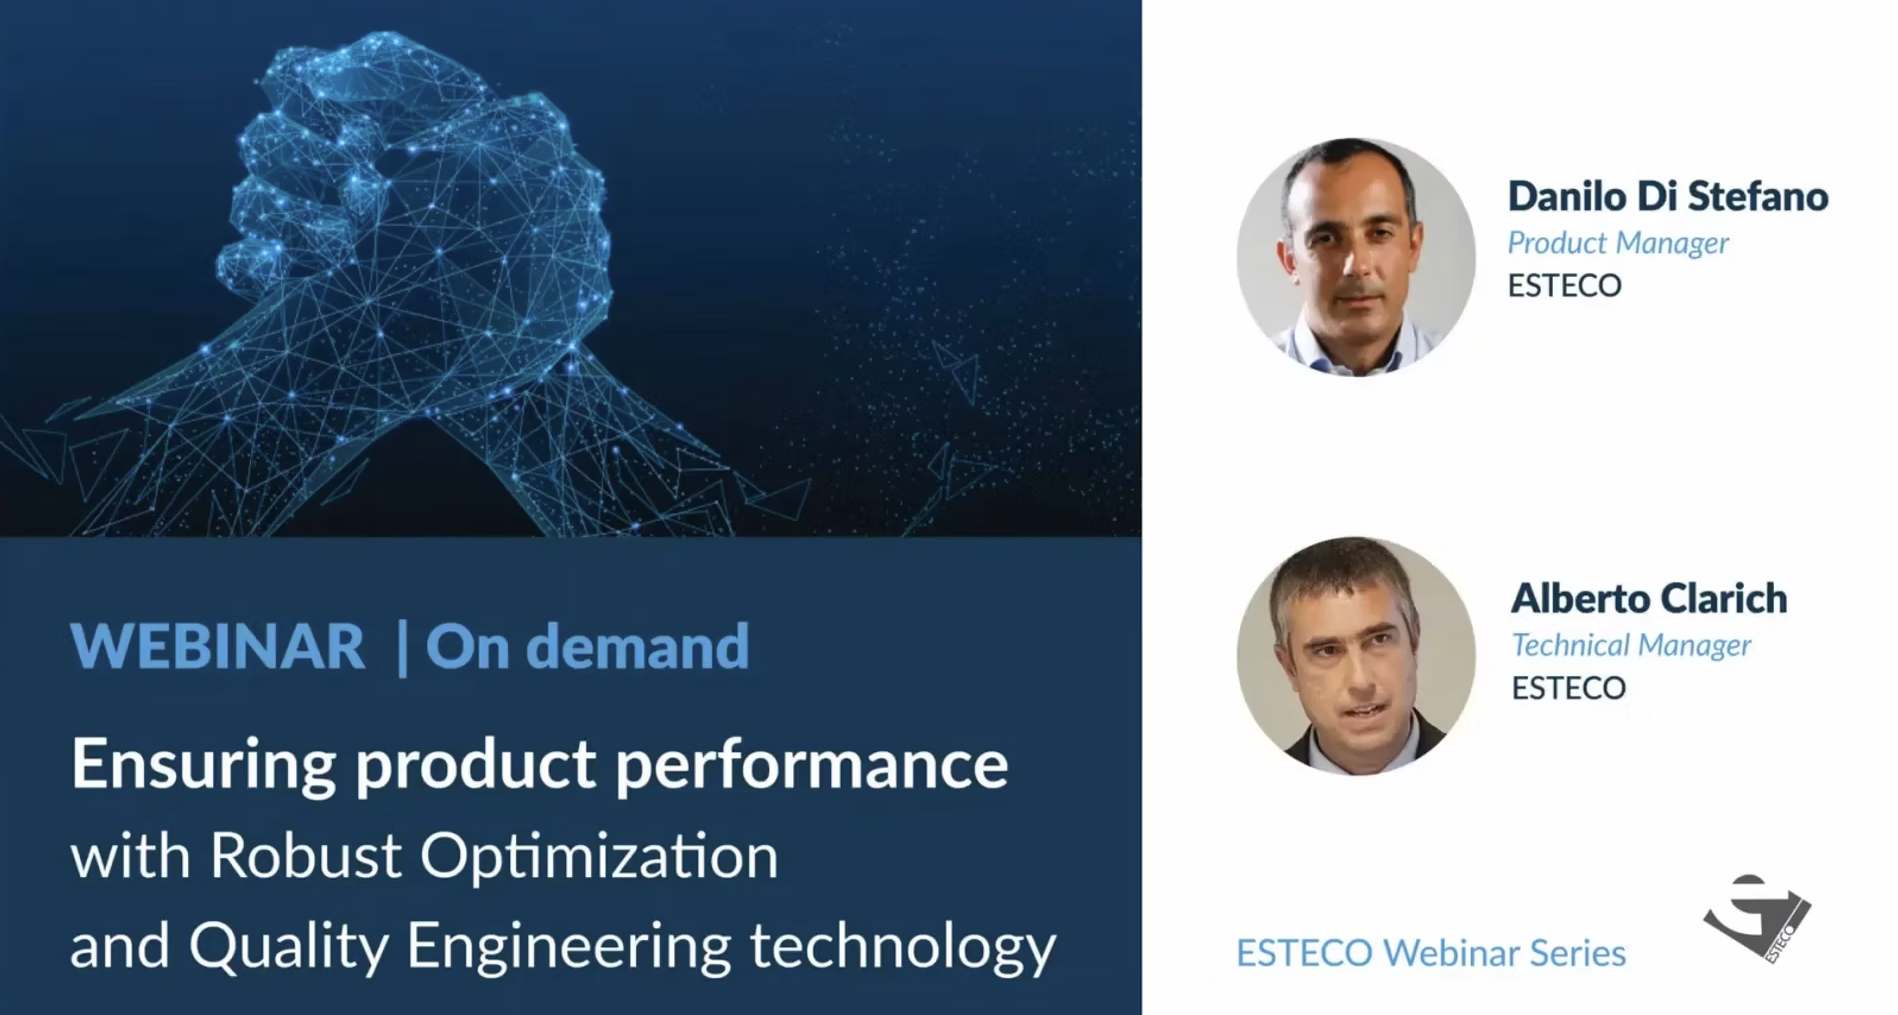 Webinar on demand ensuring product performance